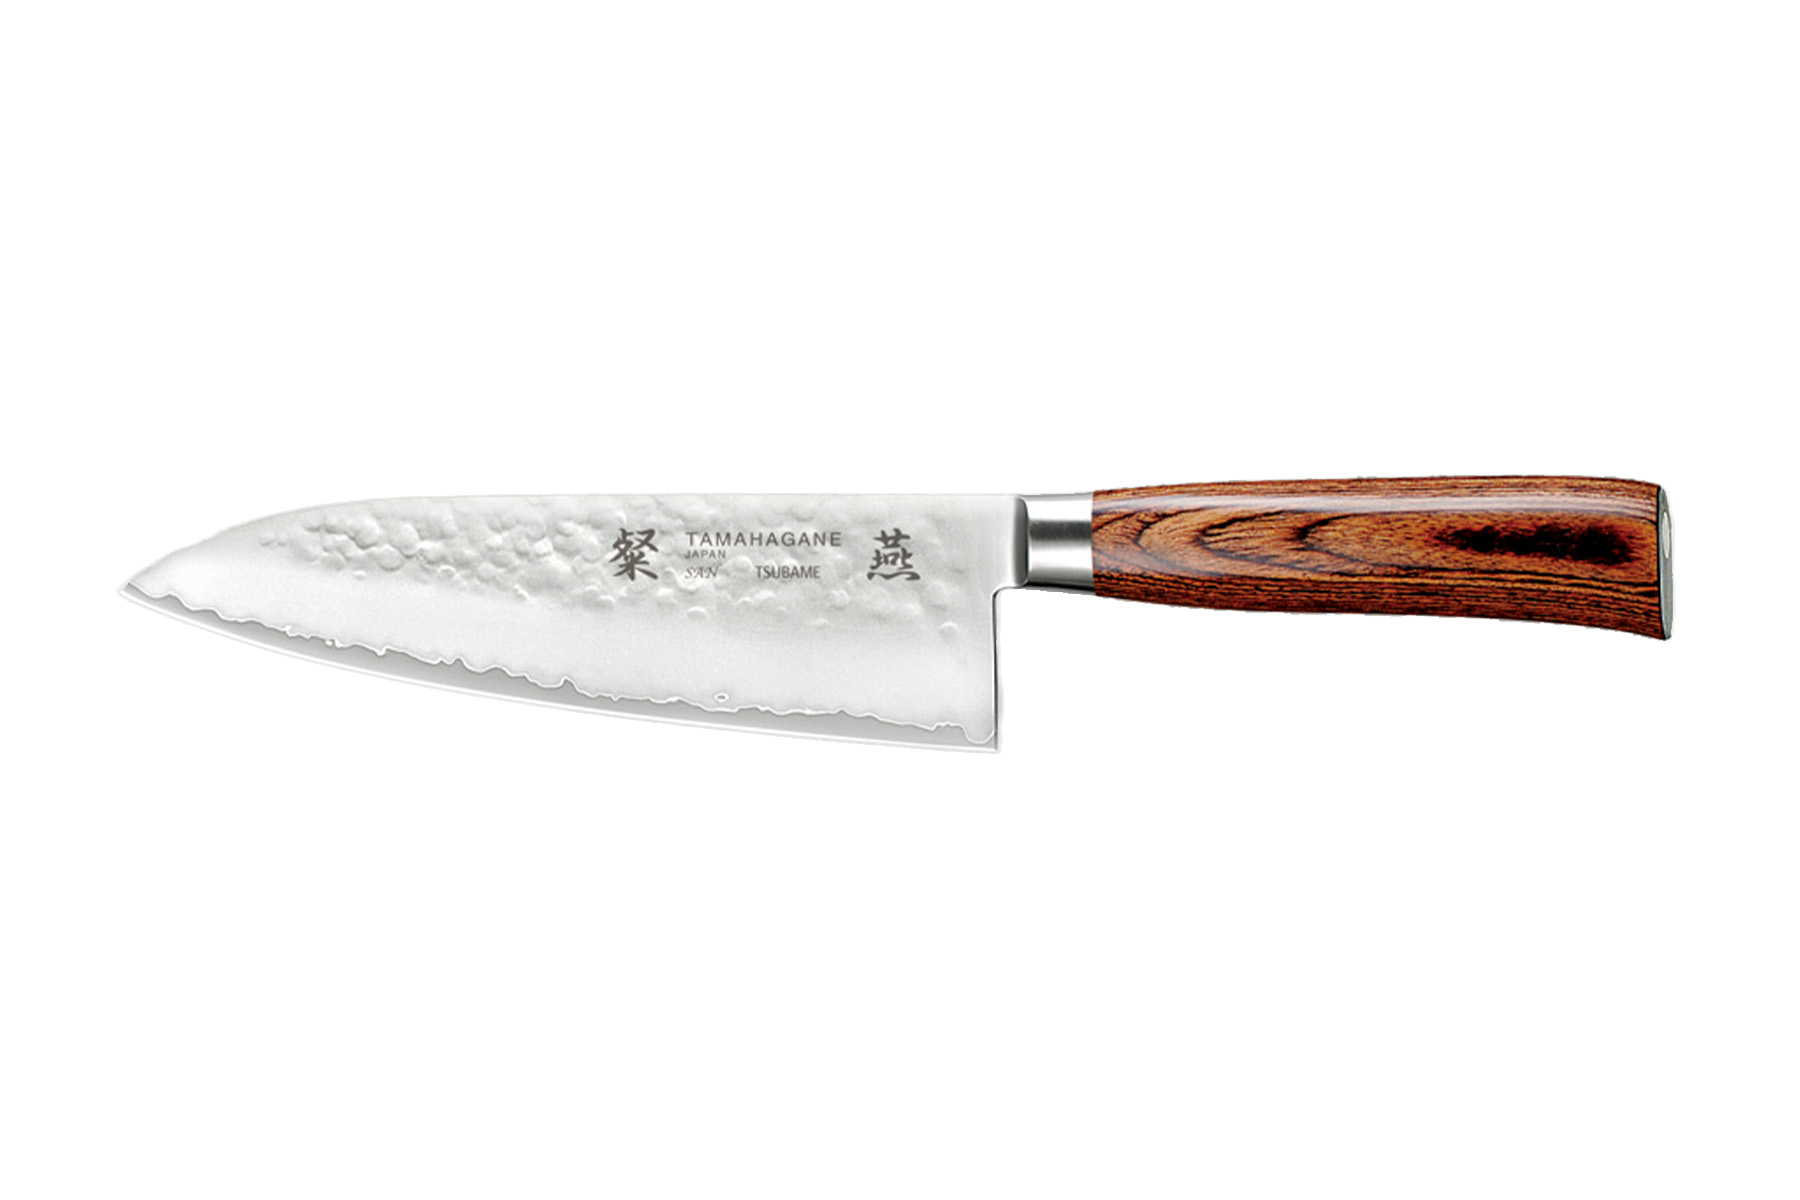 Couteau japonais Tamahagane Tsubame pakkawood - couteau de chef 15 cm